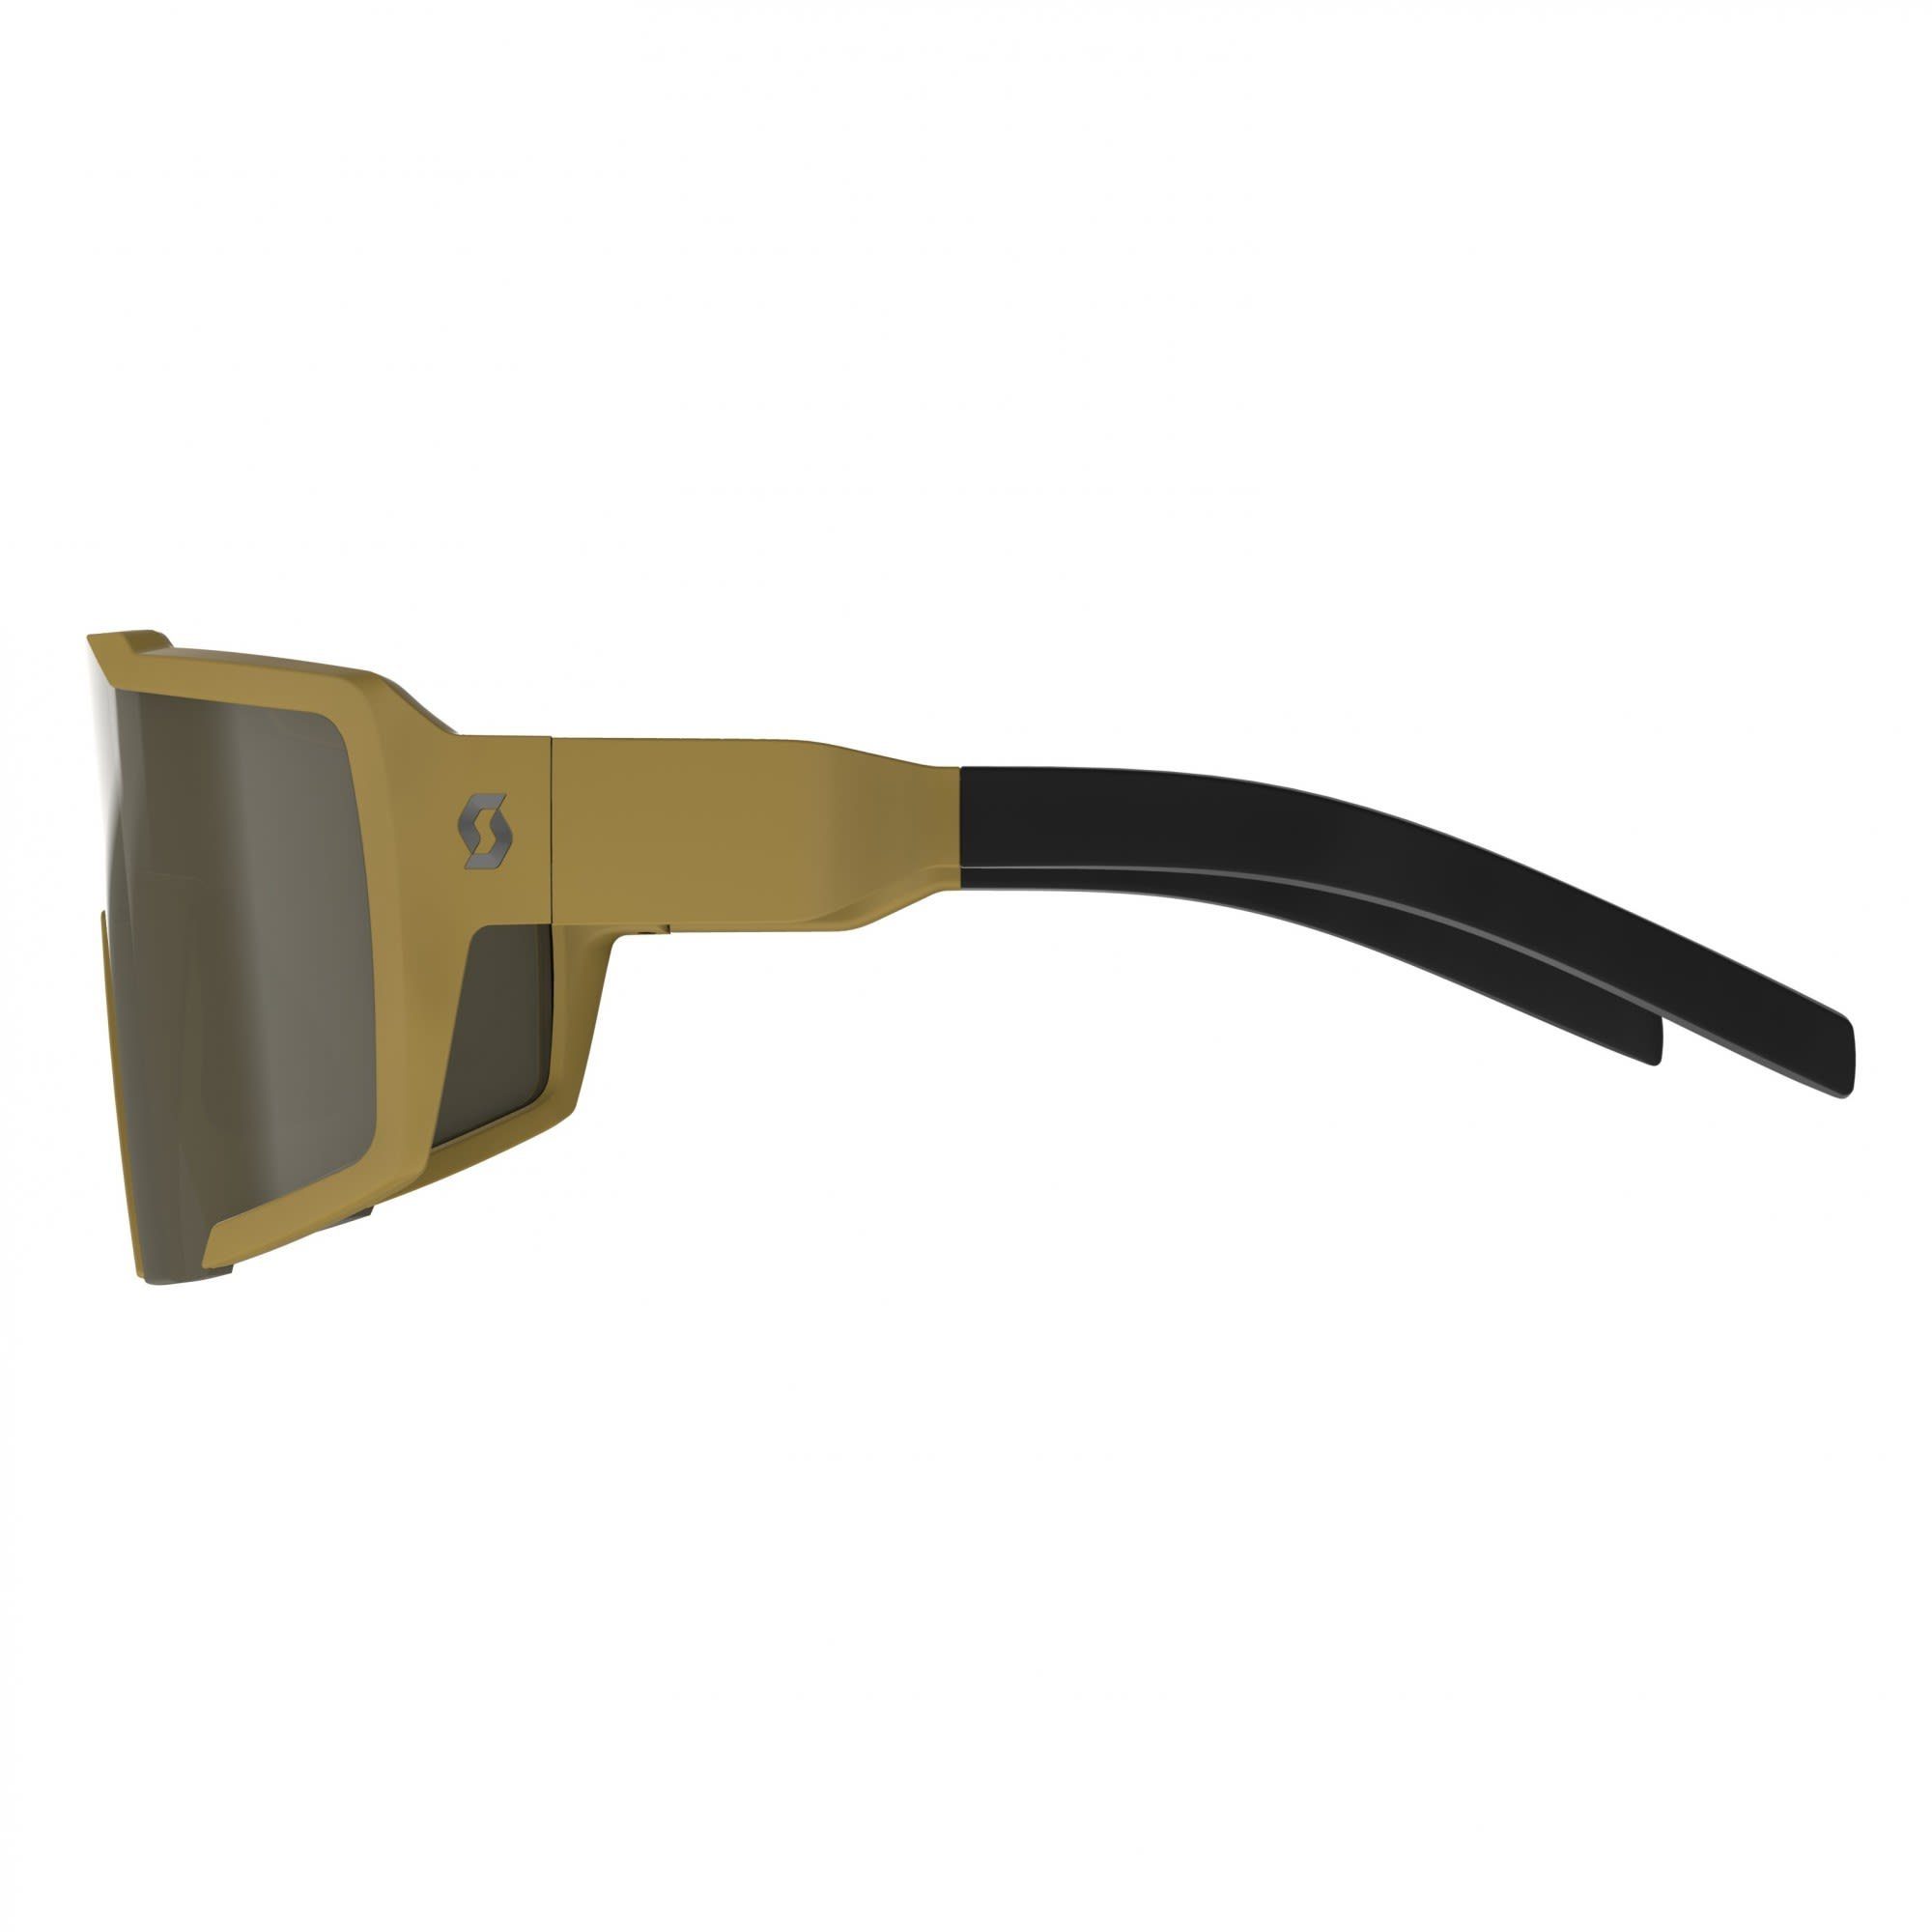 Scott Fahrradbrille Scott Shield Compact Accessoires Bronze Gold Chrome Sunglasses 